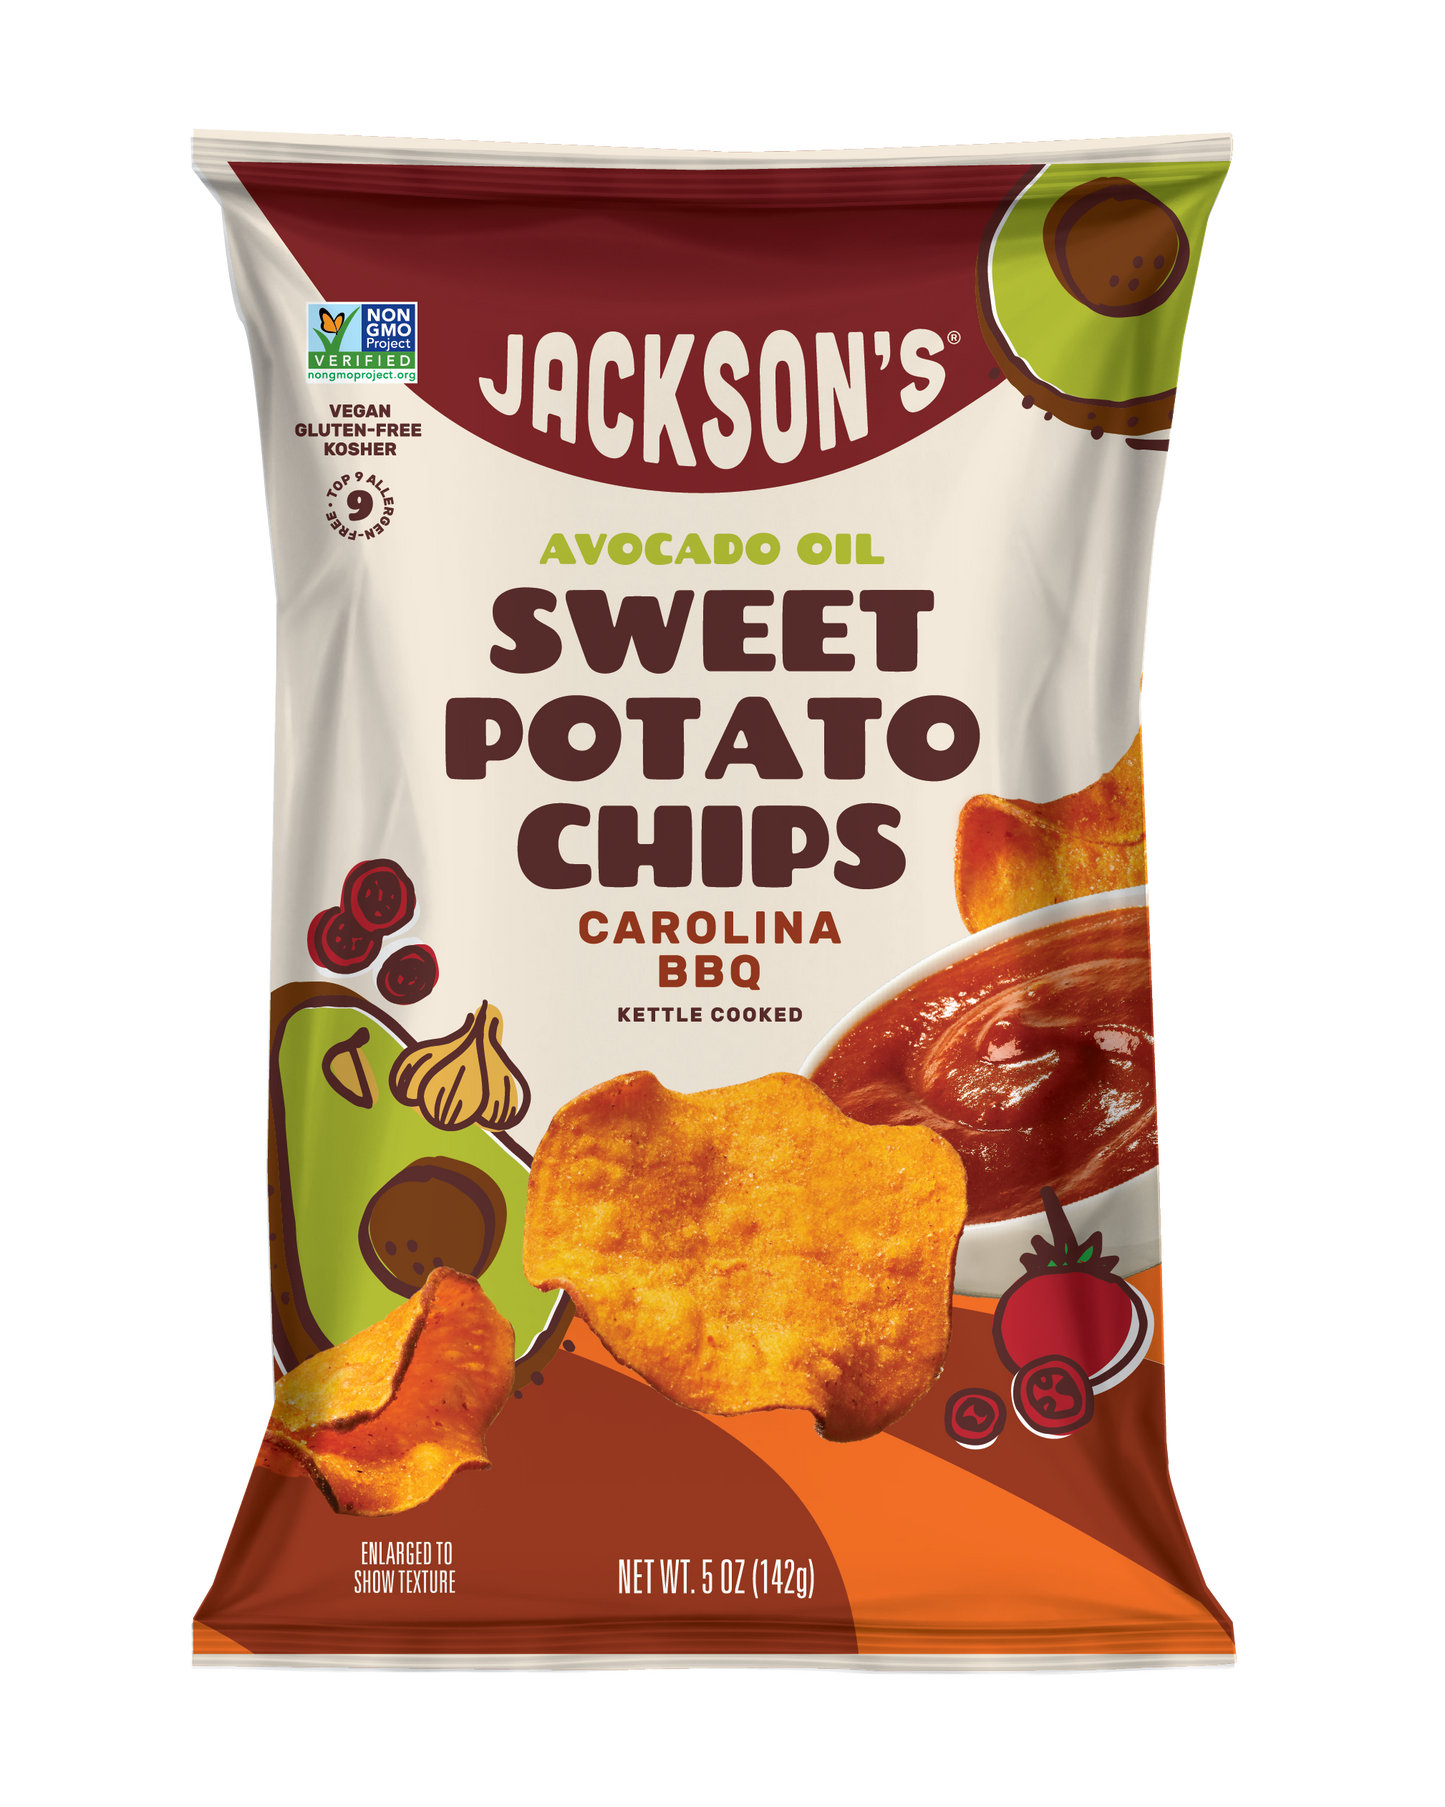 Carolina BBQ Sweet Potato Chips with Avocado Oil by Jackson's